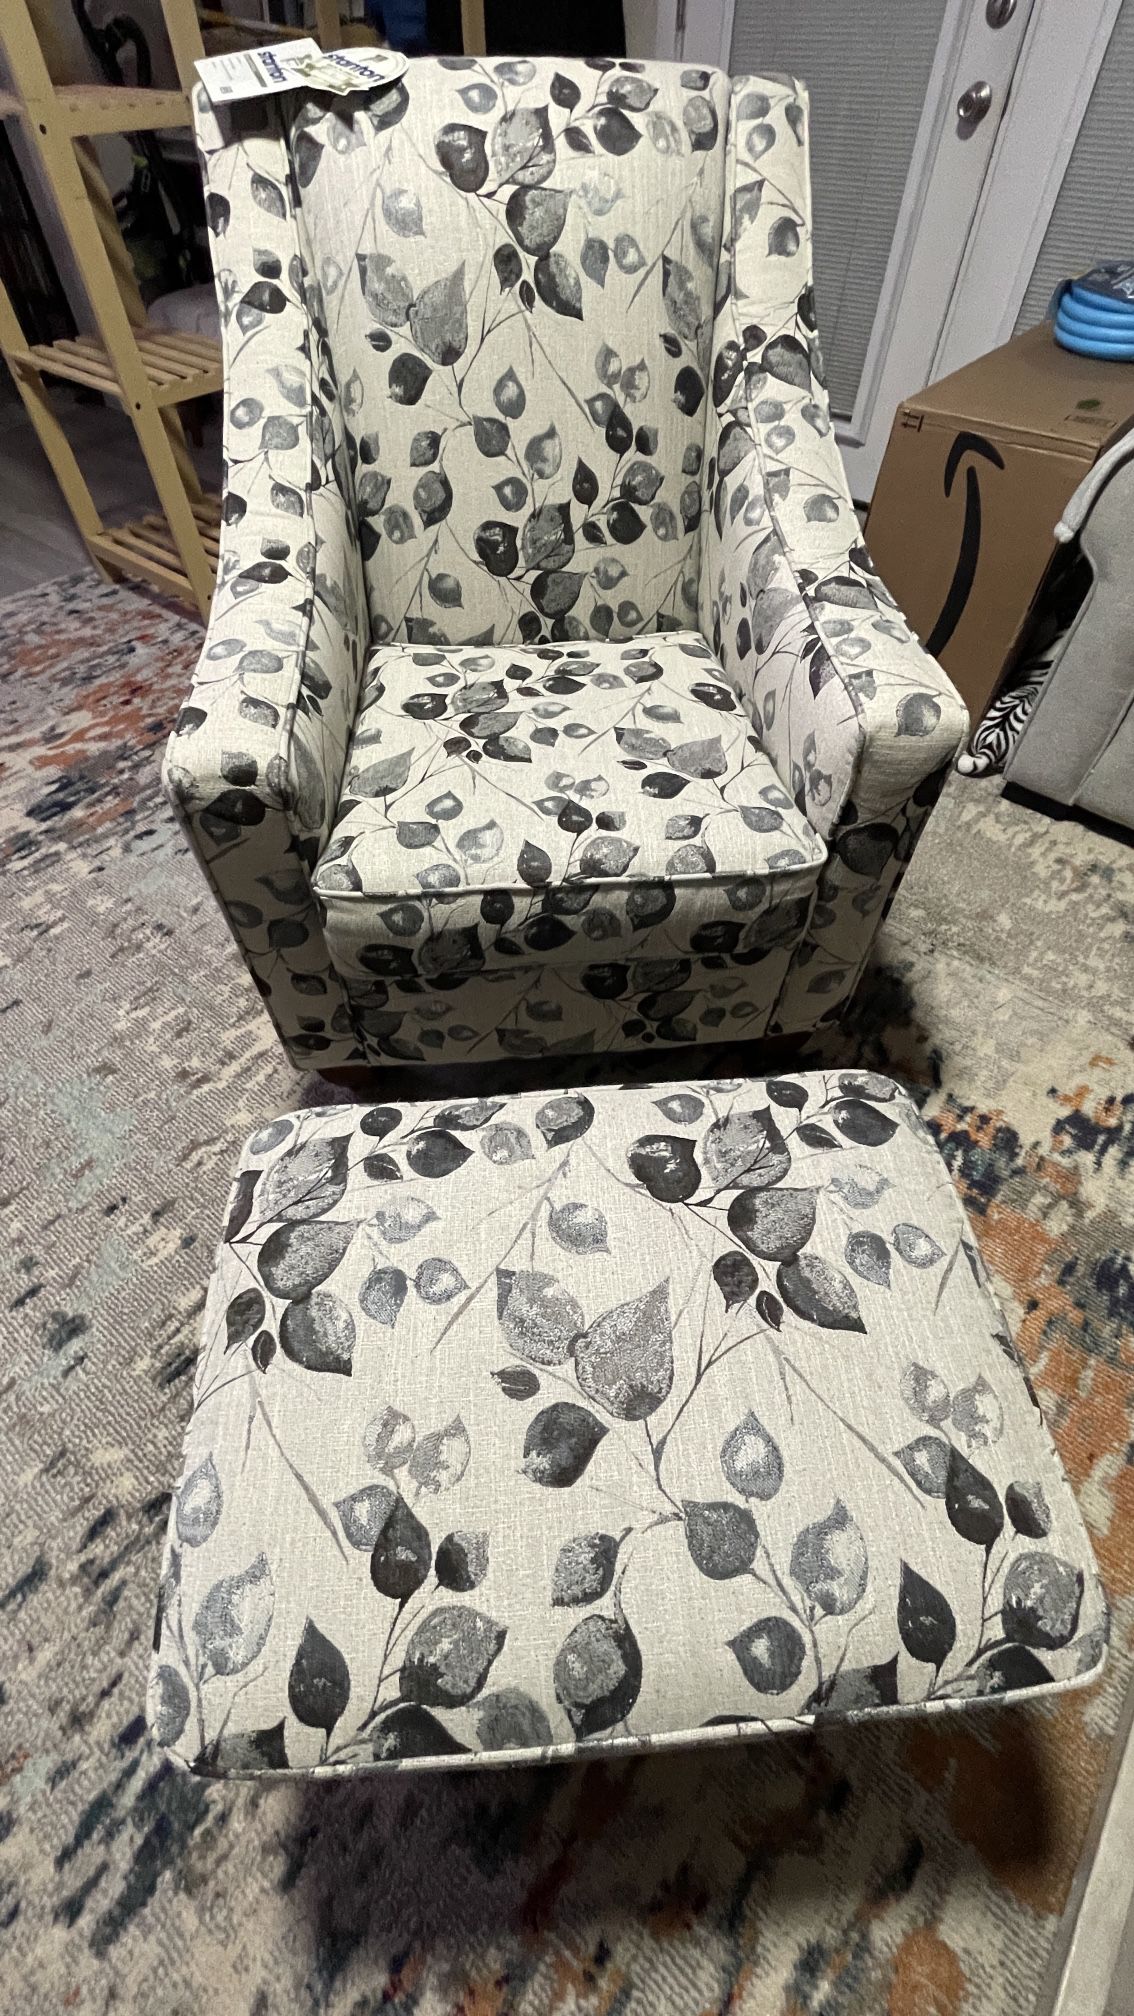 Stanton™ 958 Chair and Ottoman Model #: 95807OT